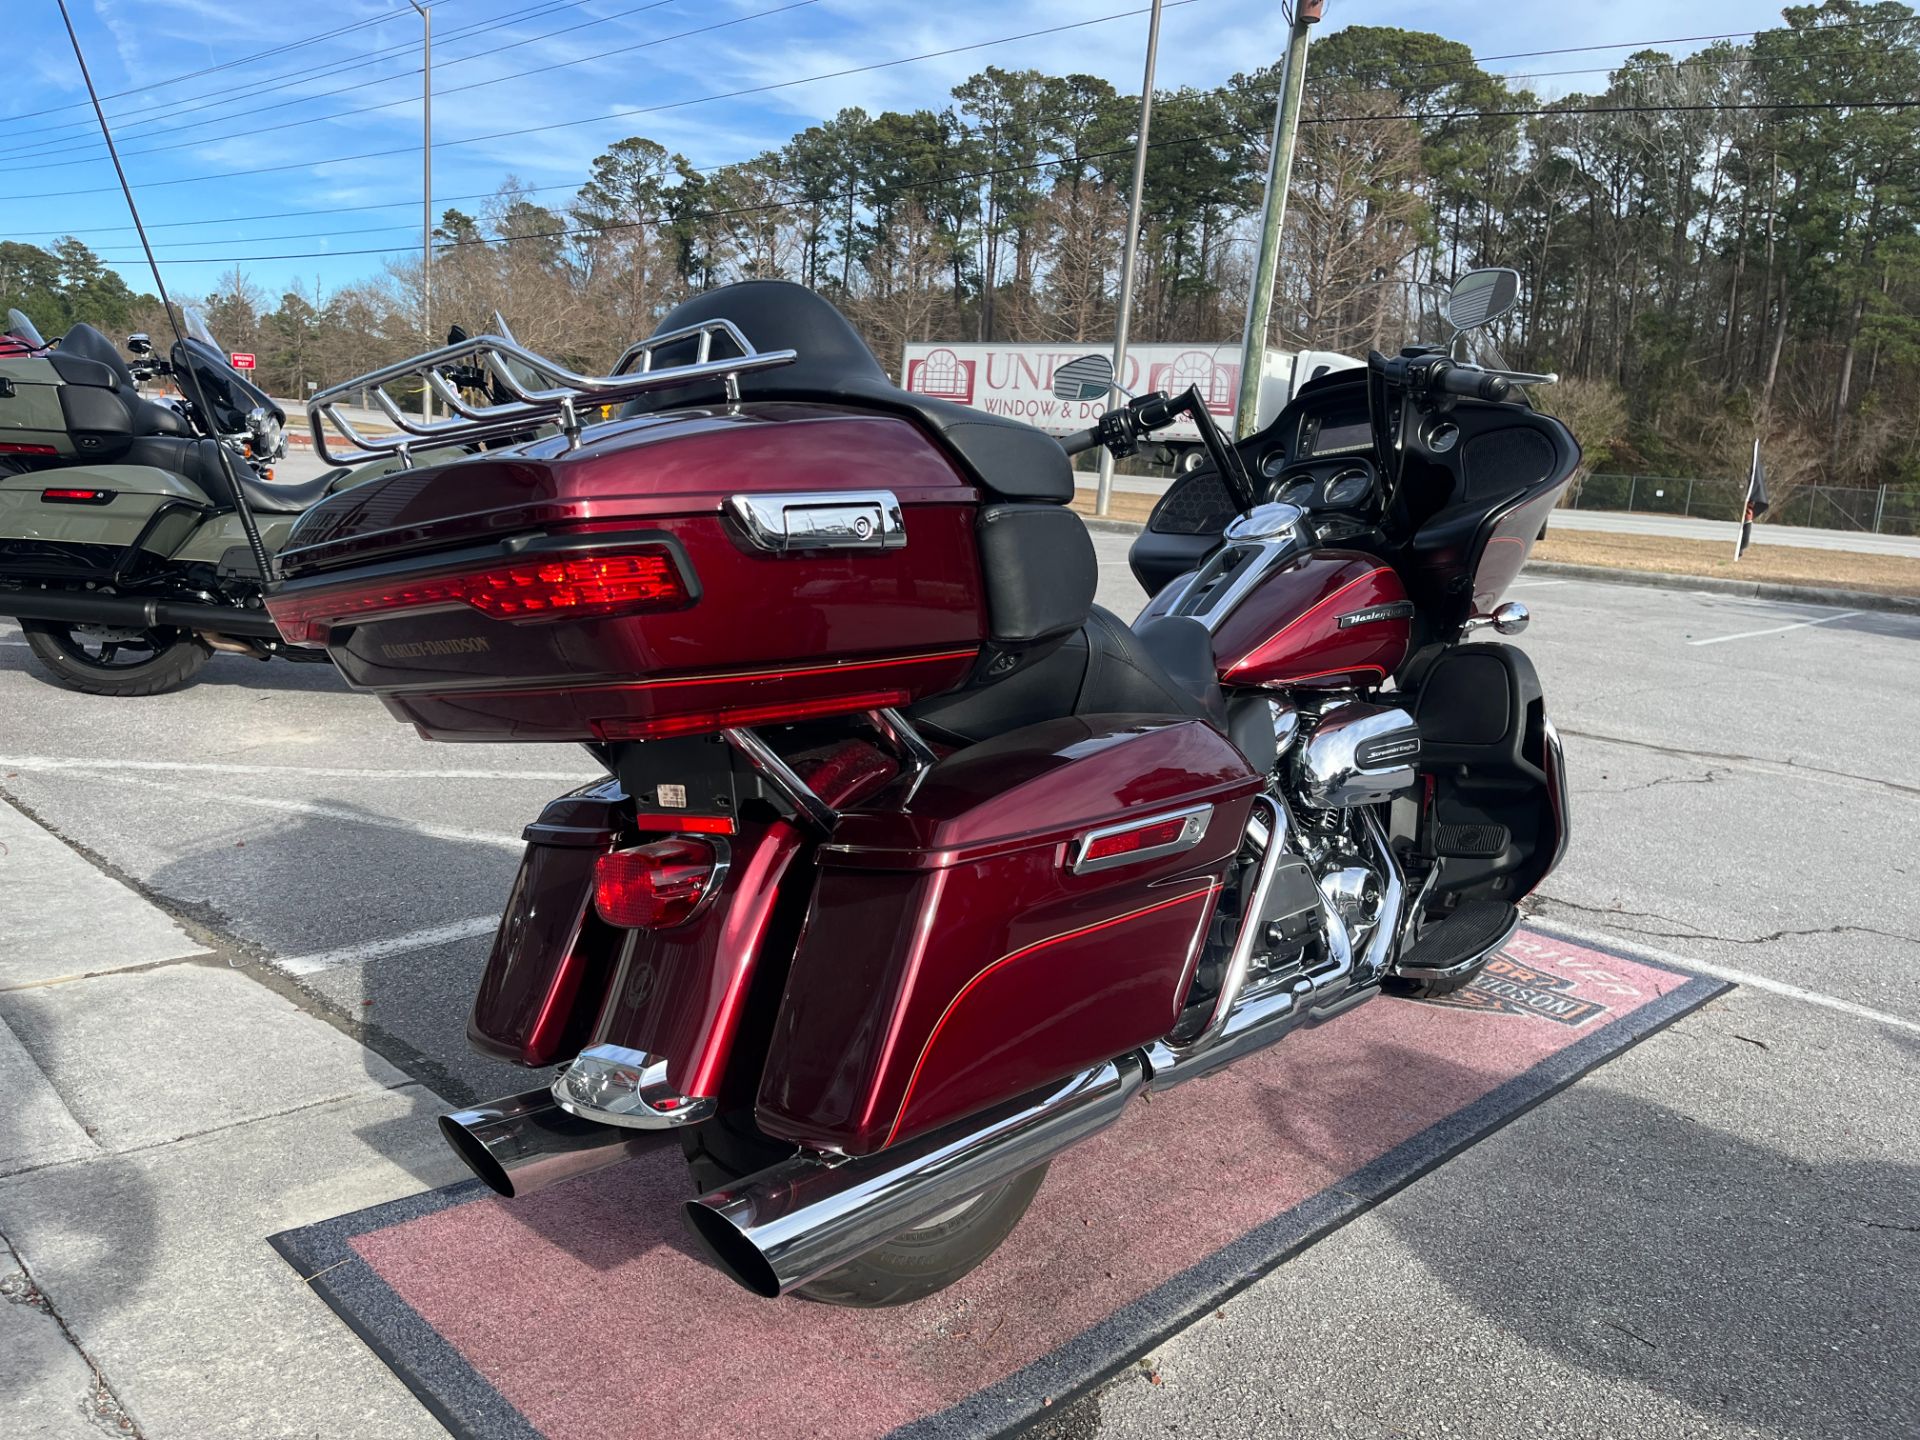 2017 Harley-Davidson Road Glide® Ultra in Jacksonville, North Carolina - Photo 5